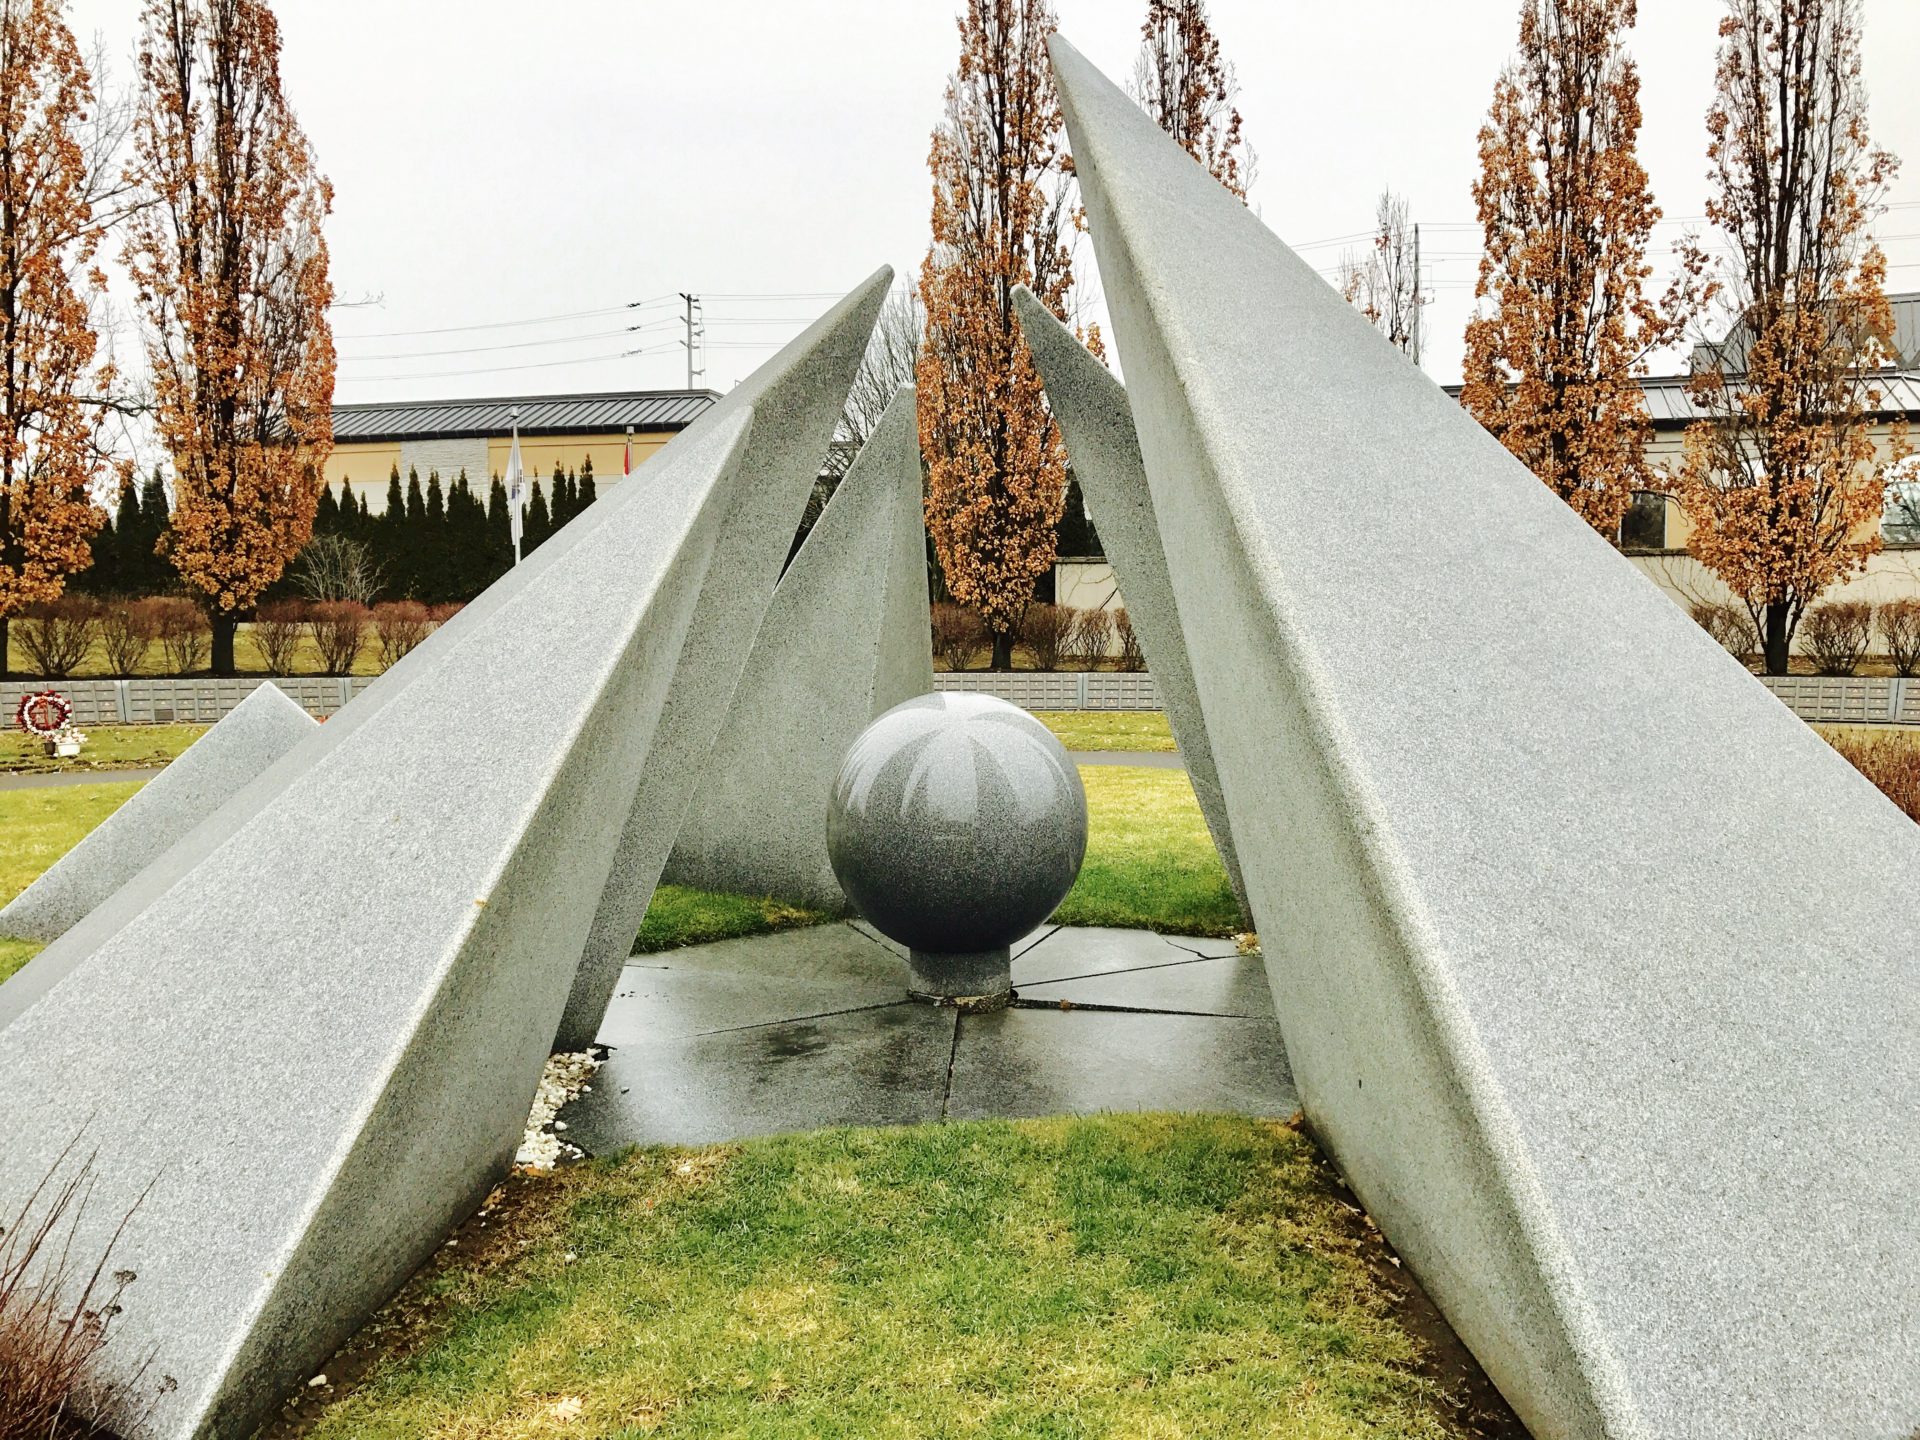 Korean War Memorials - Toronto - Canada